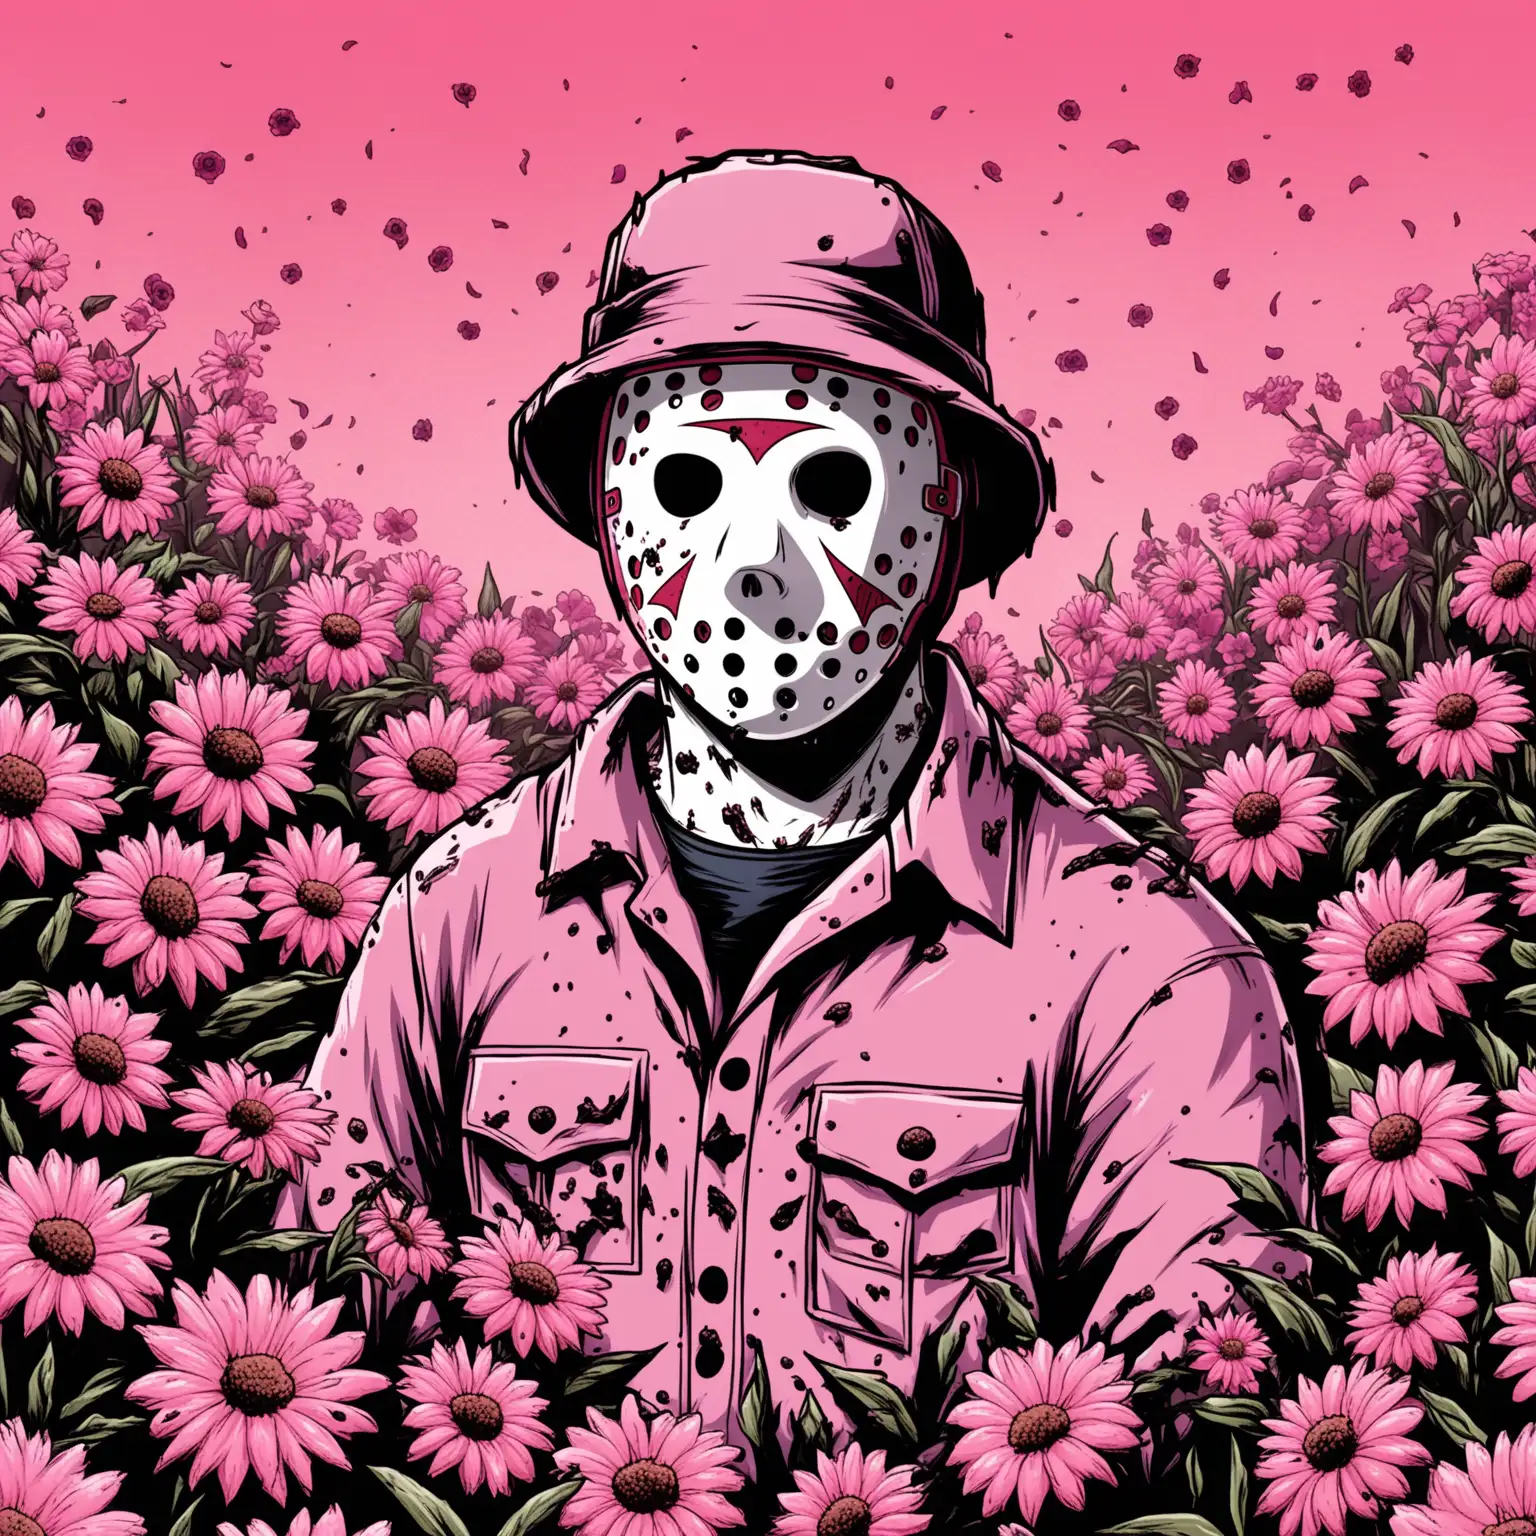 cartoon Jason vorhees in pink hat with pink flowers surrounding him